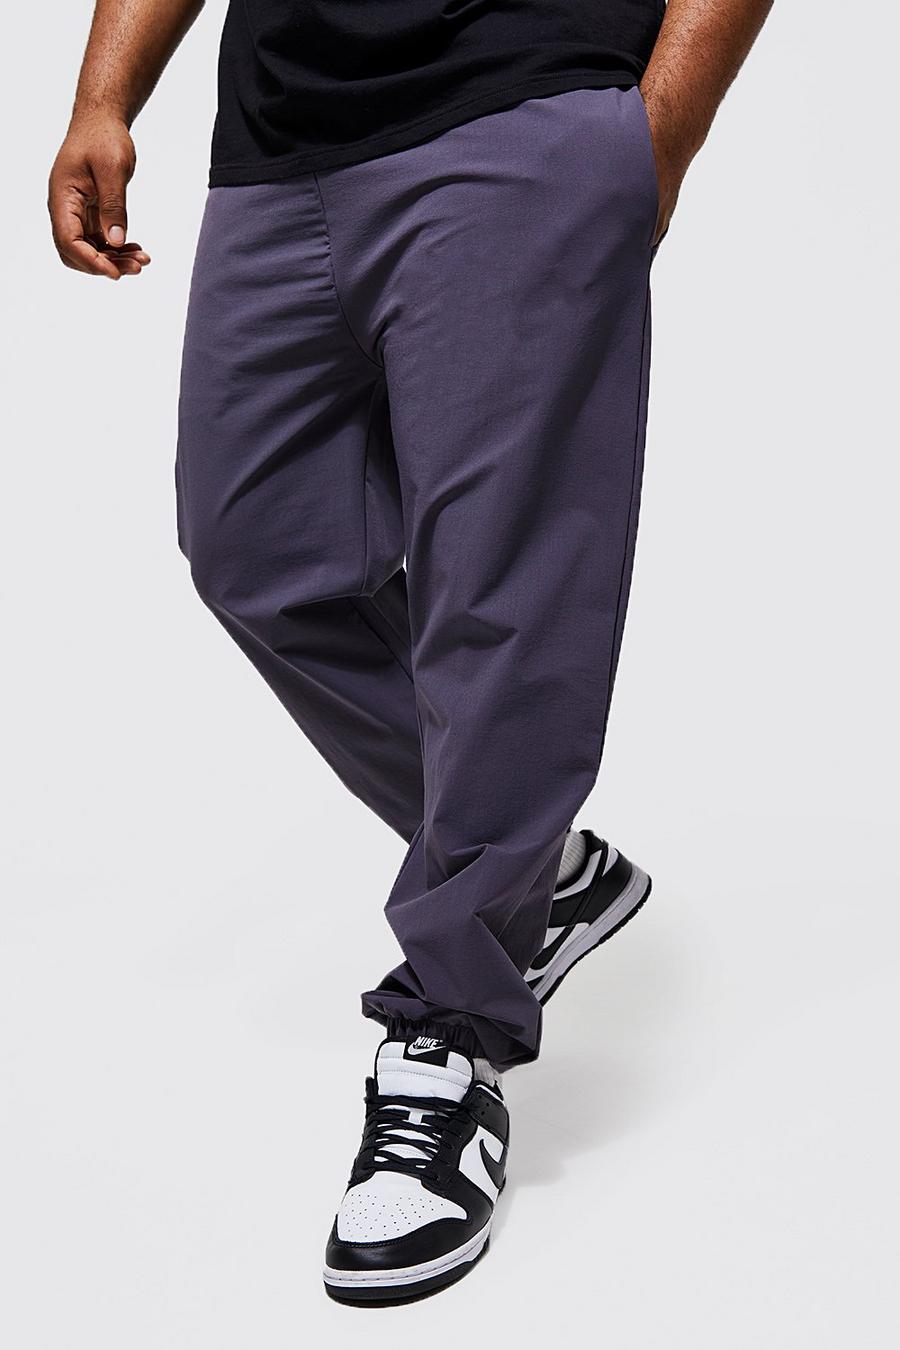 Pantaloni tecnici Plus Size Slim Fit con polsini alle caviglie, Dark grey gris